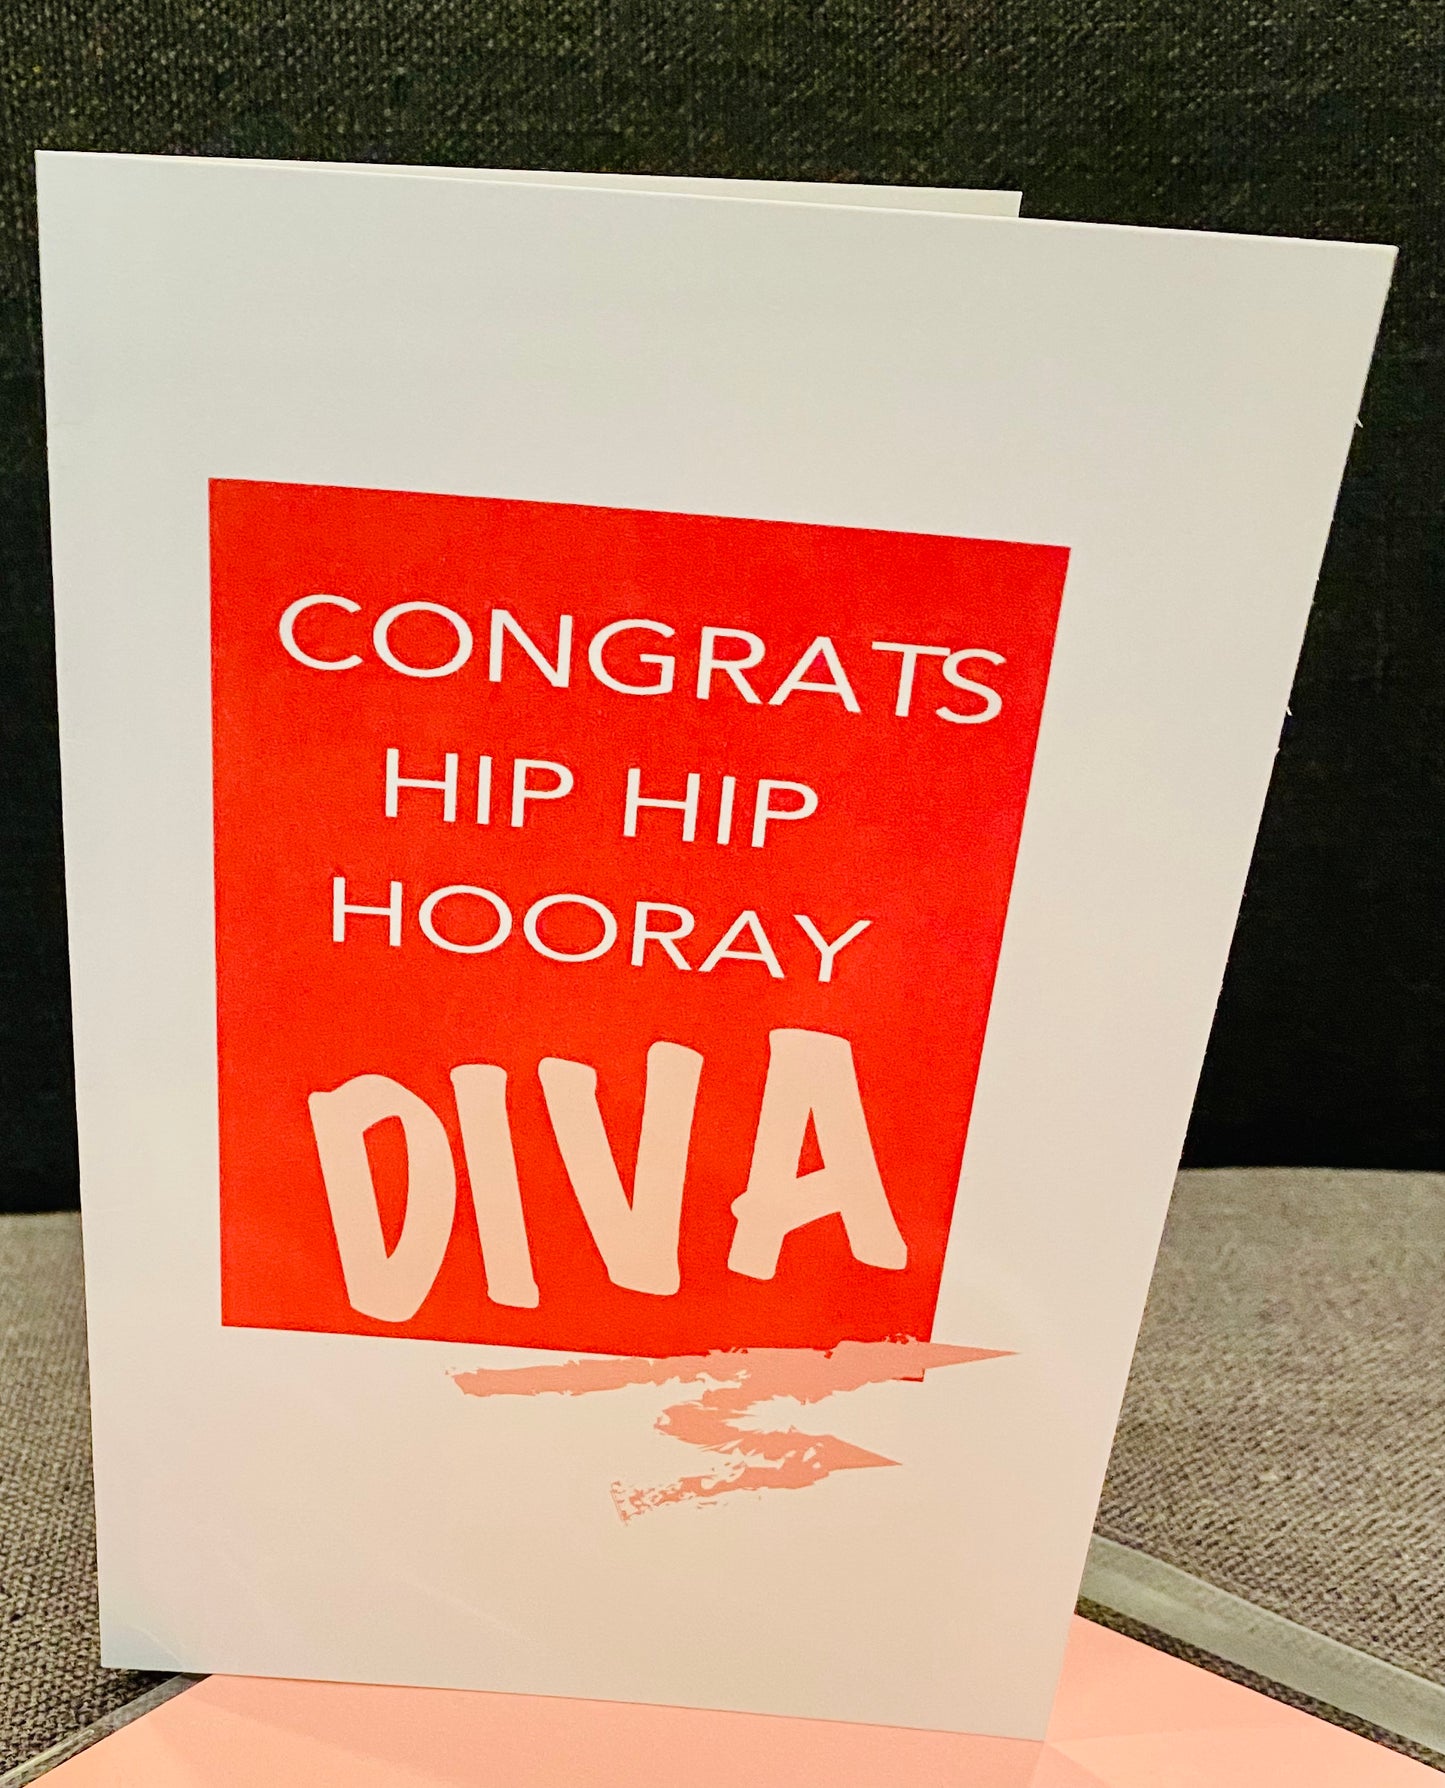 Congrats Hip Hip Hooray DIVA 5x7 Congratulations Encouragement Greeting Card